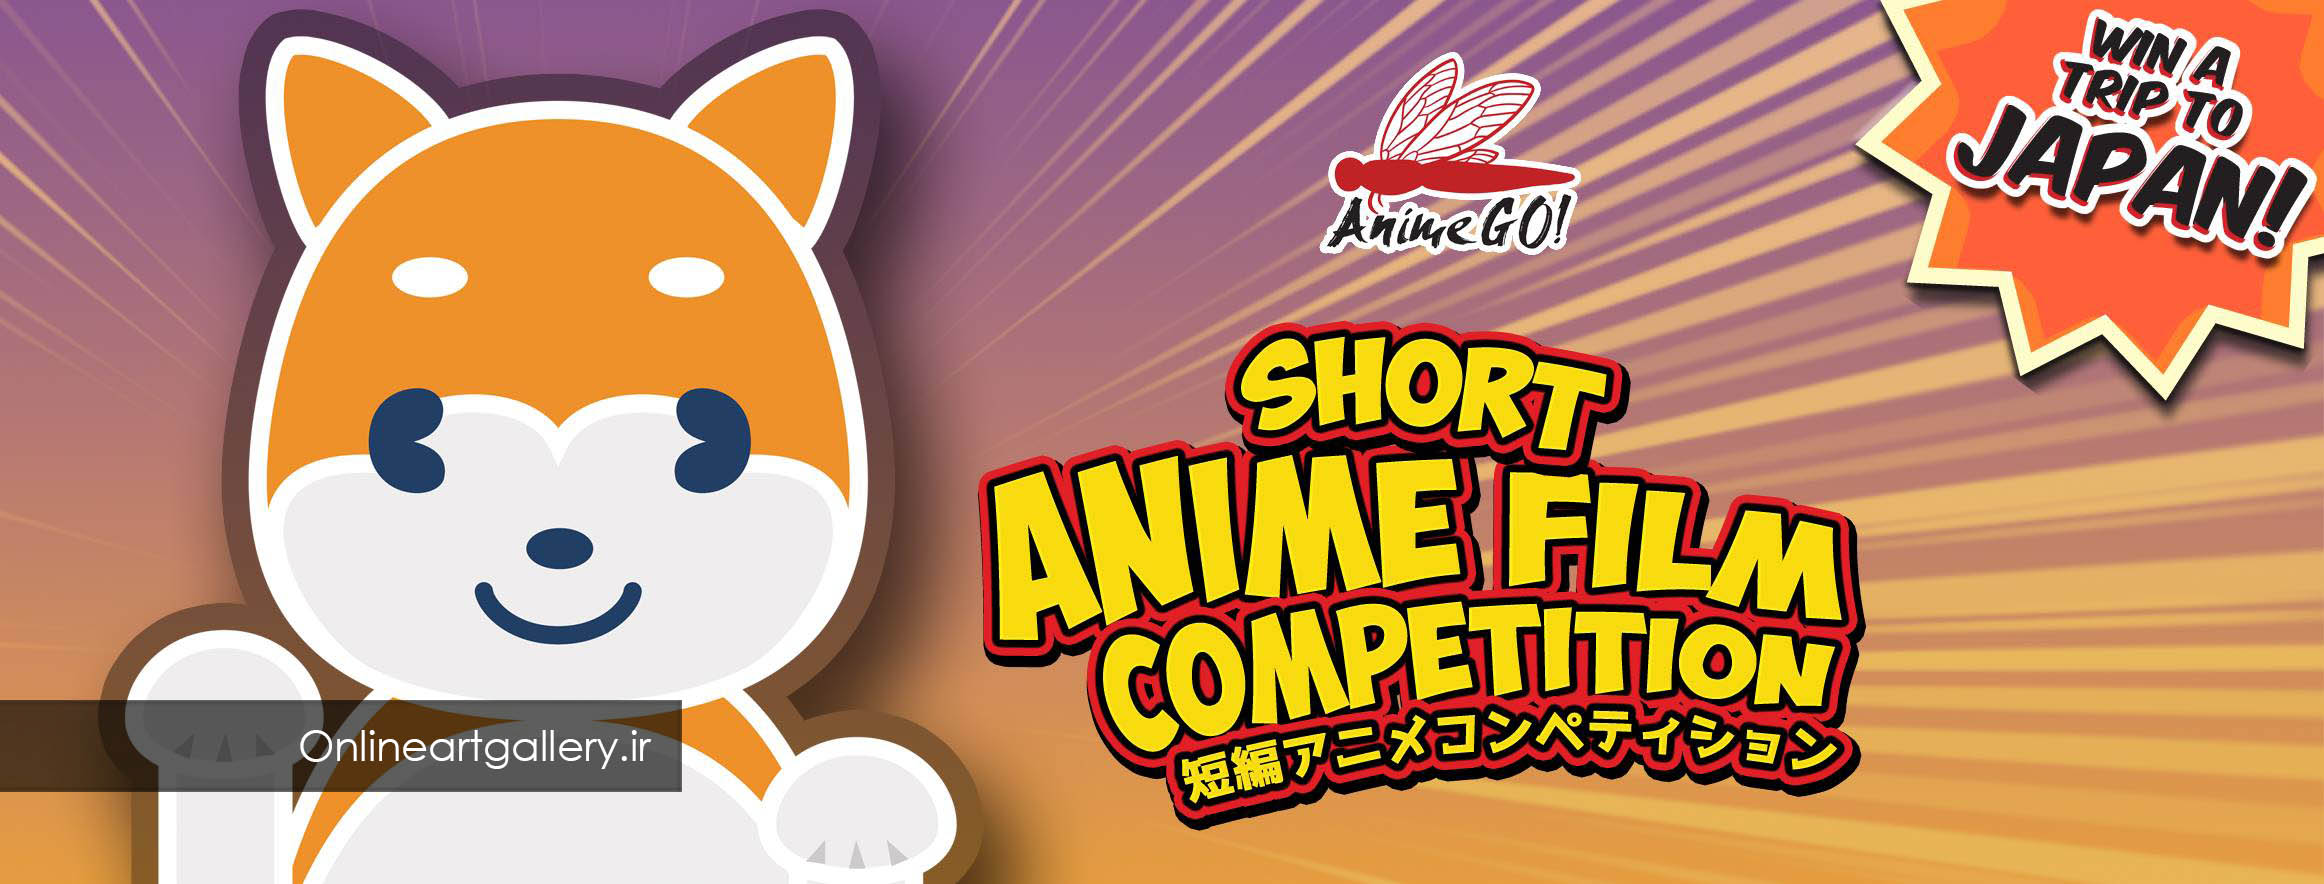 فراخوان رقابت انیمیشن AnimeGO